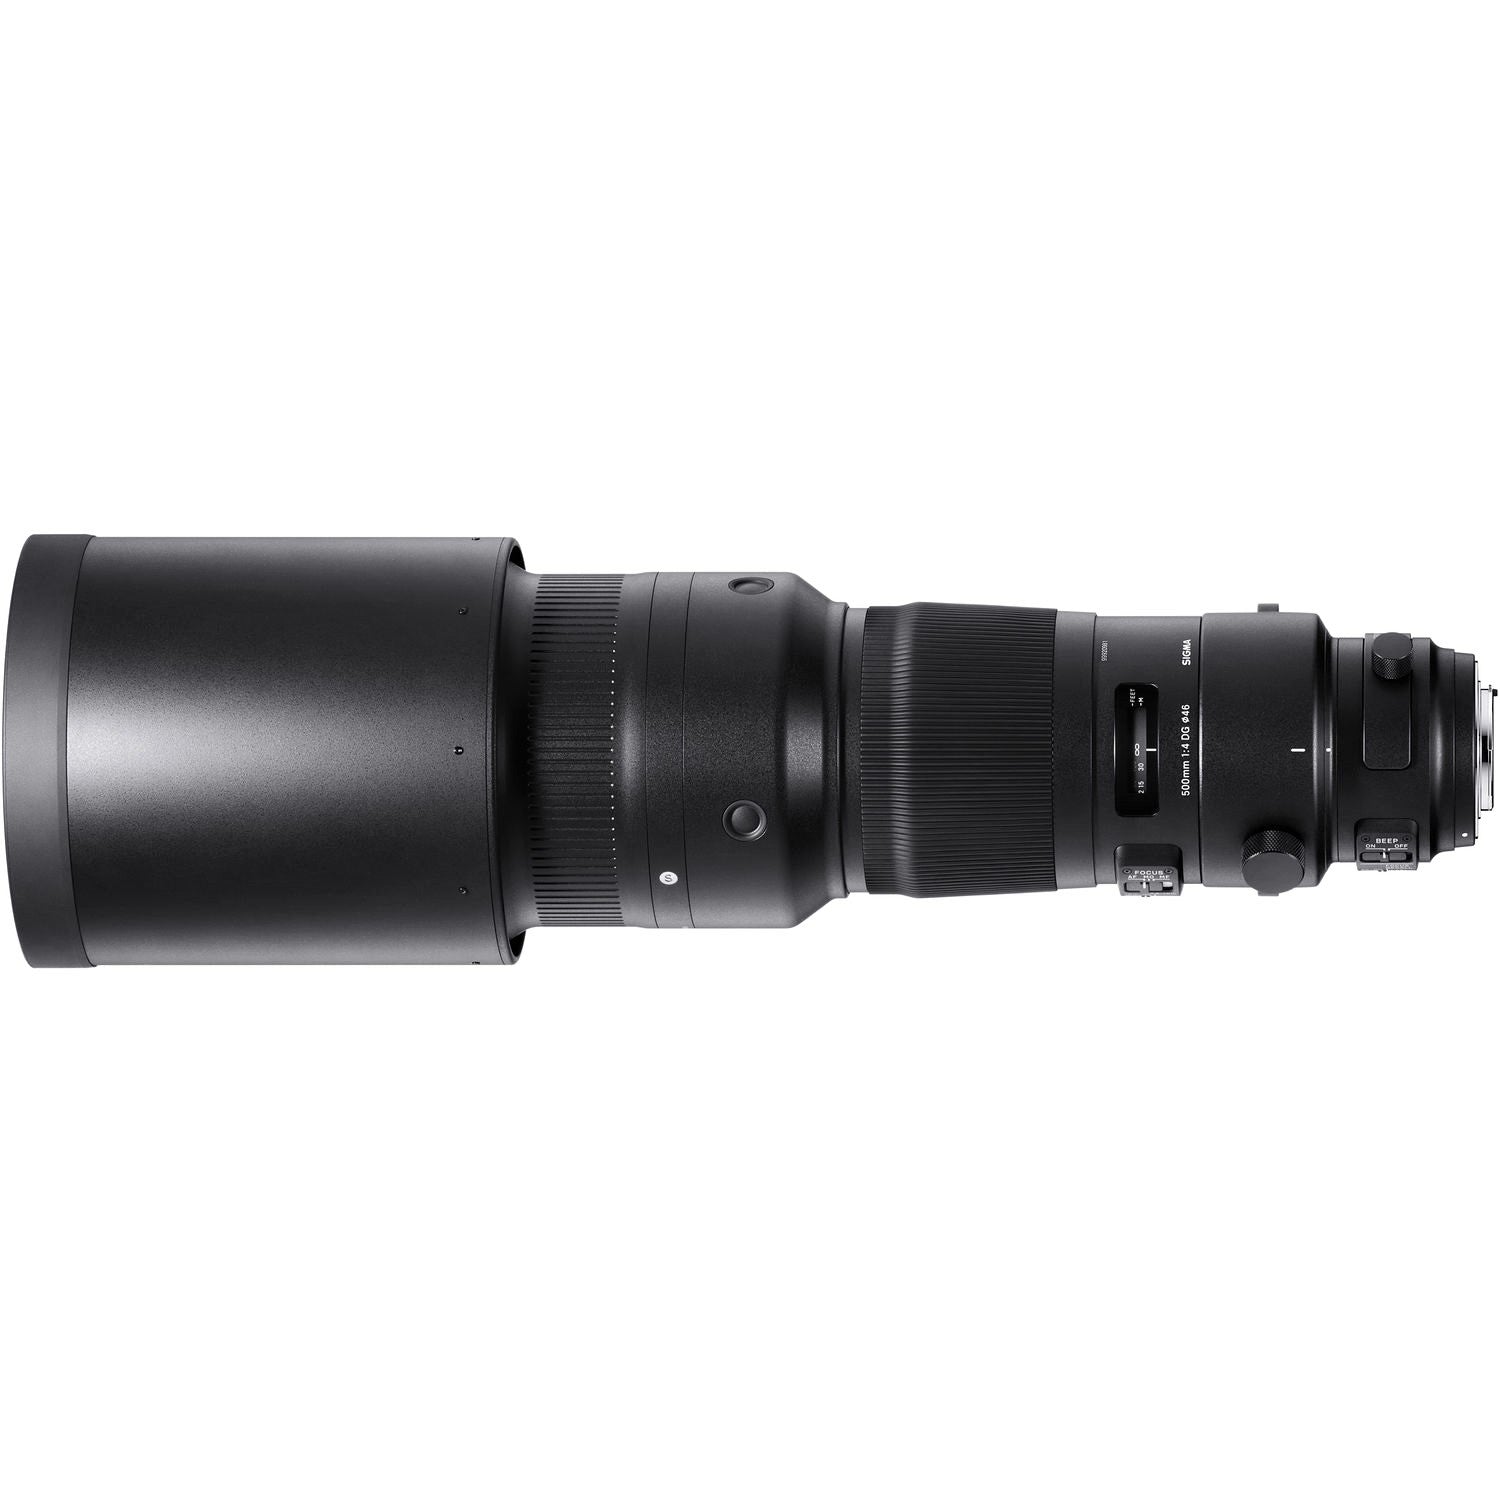 Sigma 500mm F4.0 DG OS HSM Sports Lens for Nikon F